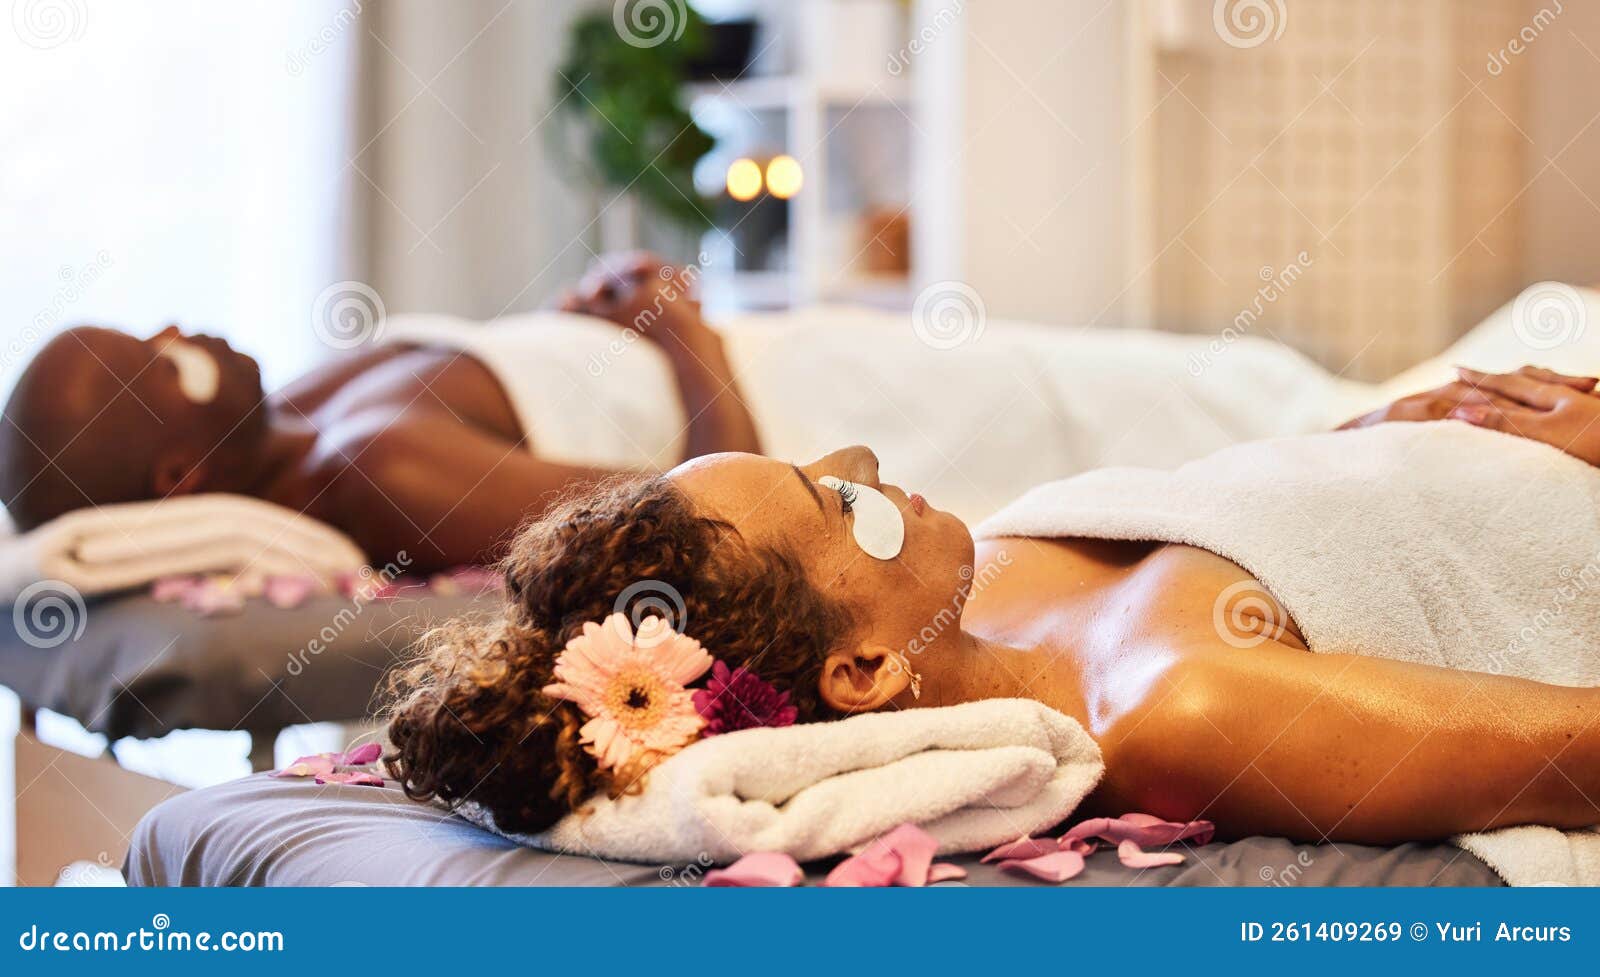 american wife nap massage